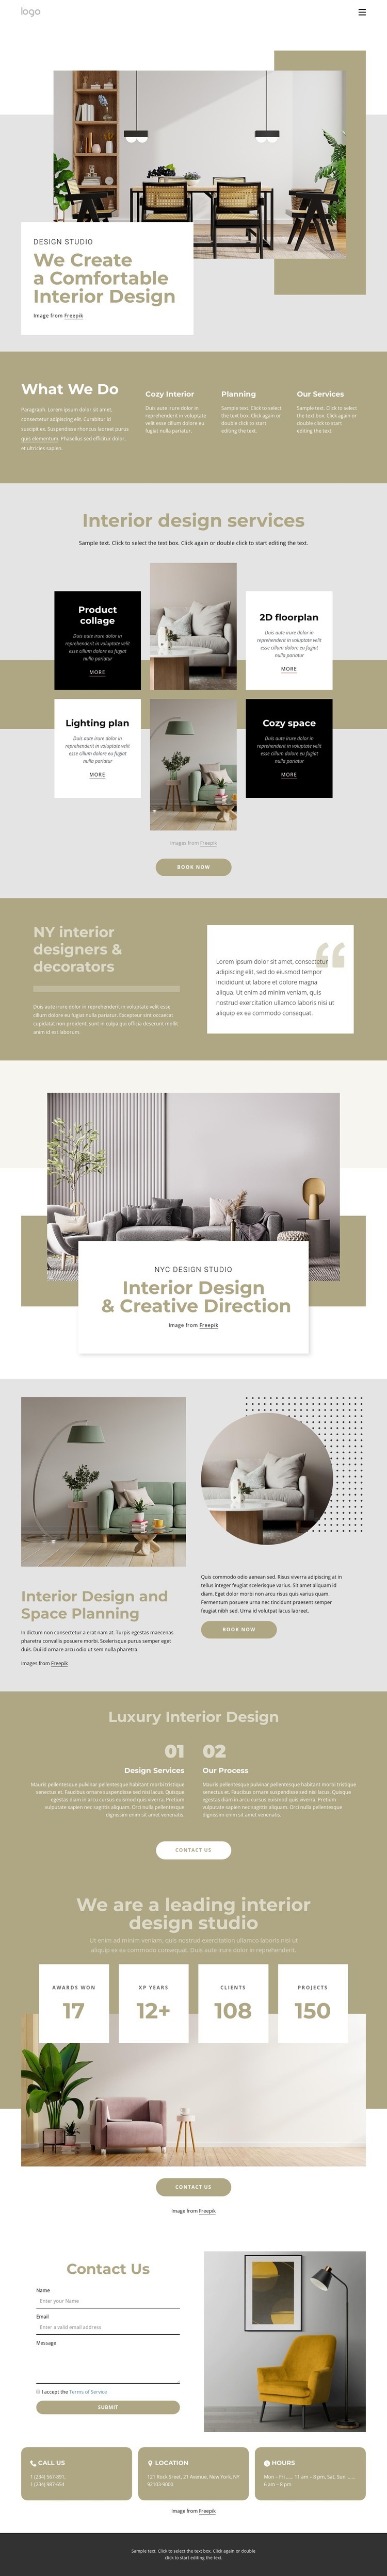 We create a comfortable interiors Webflow Template Alternative